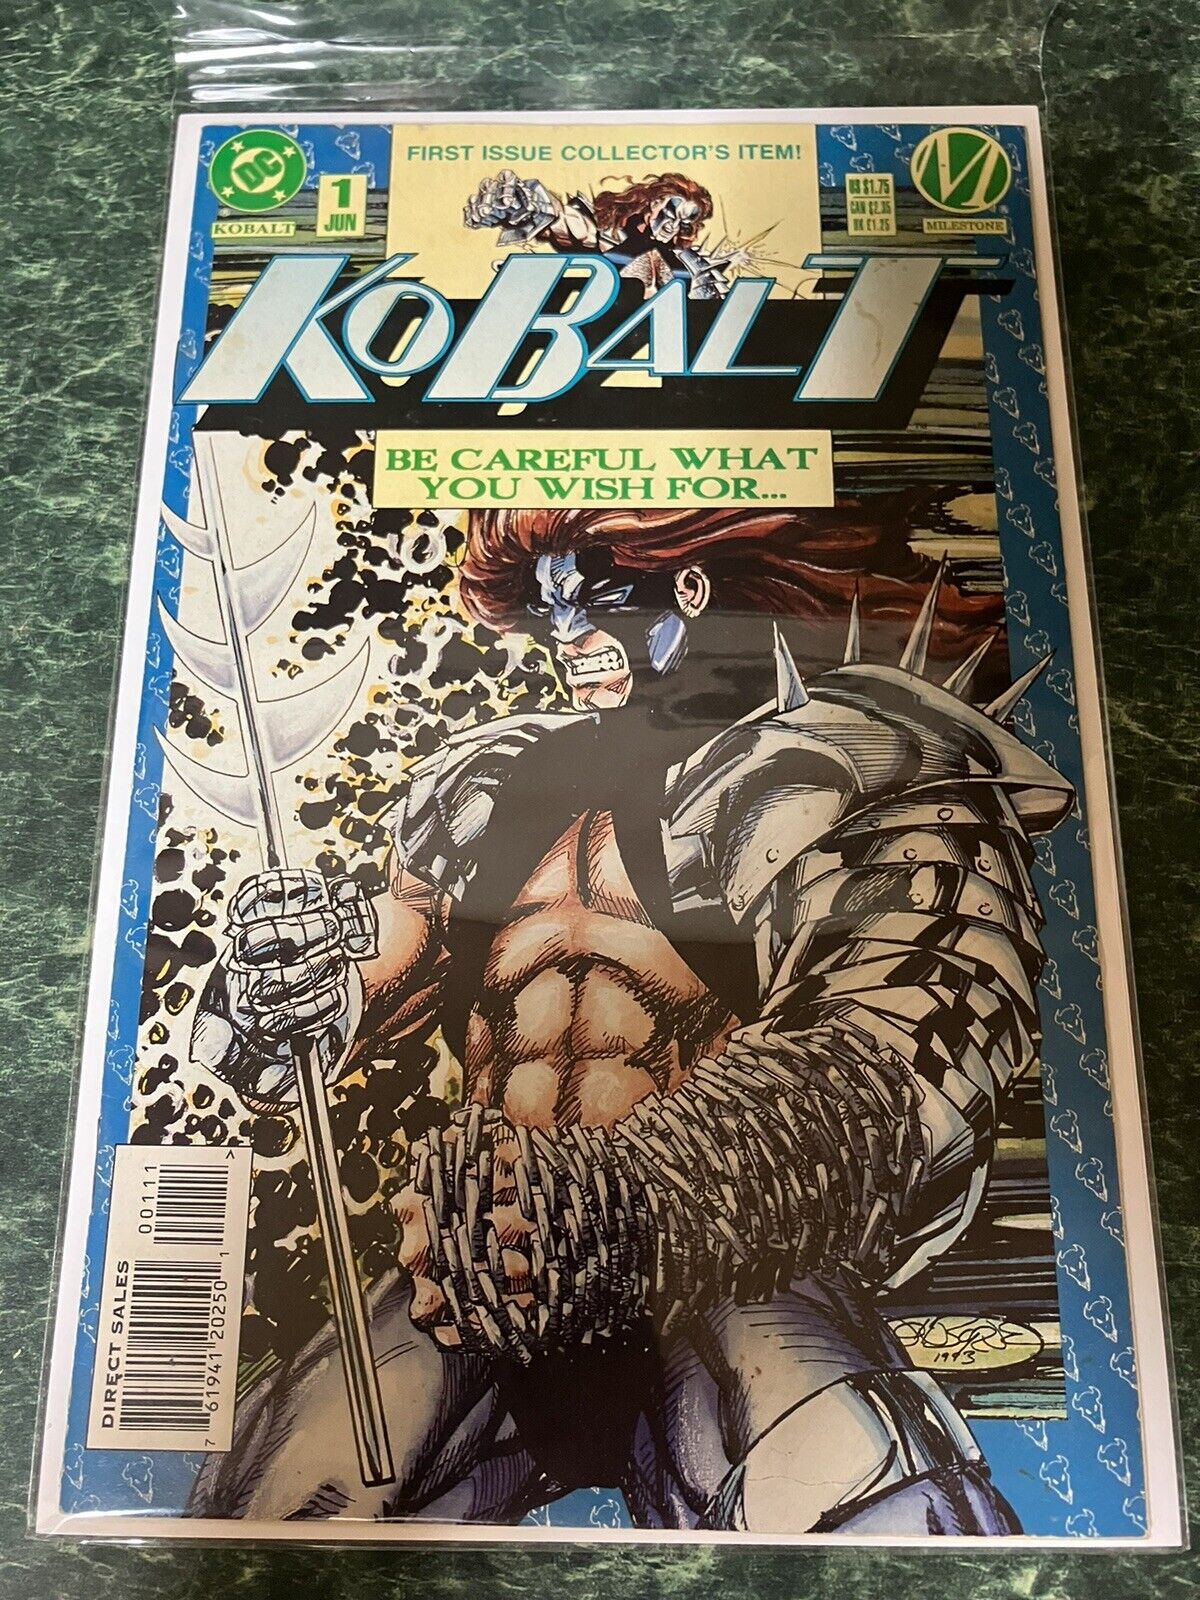 KOBALT #1 Milestone  (1994) DC Comics VF-NM 1st issue collectors item